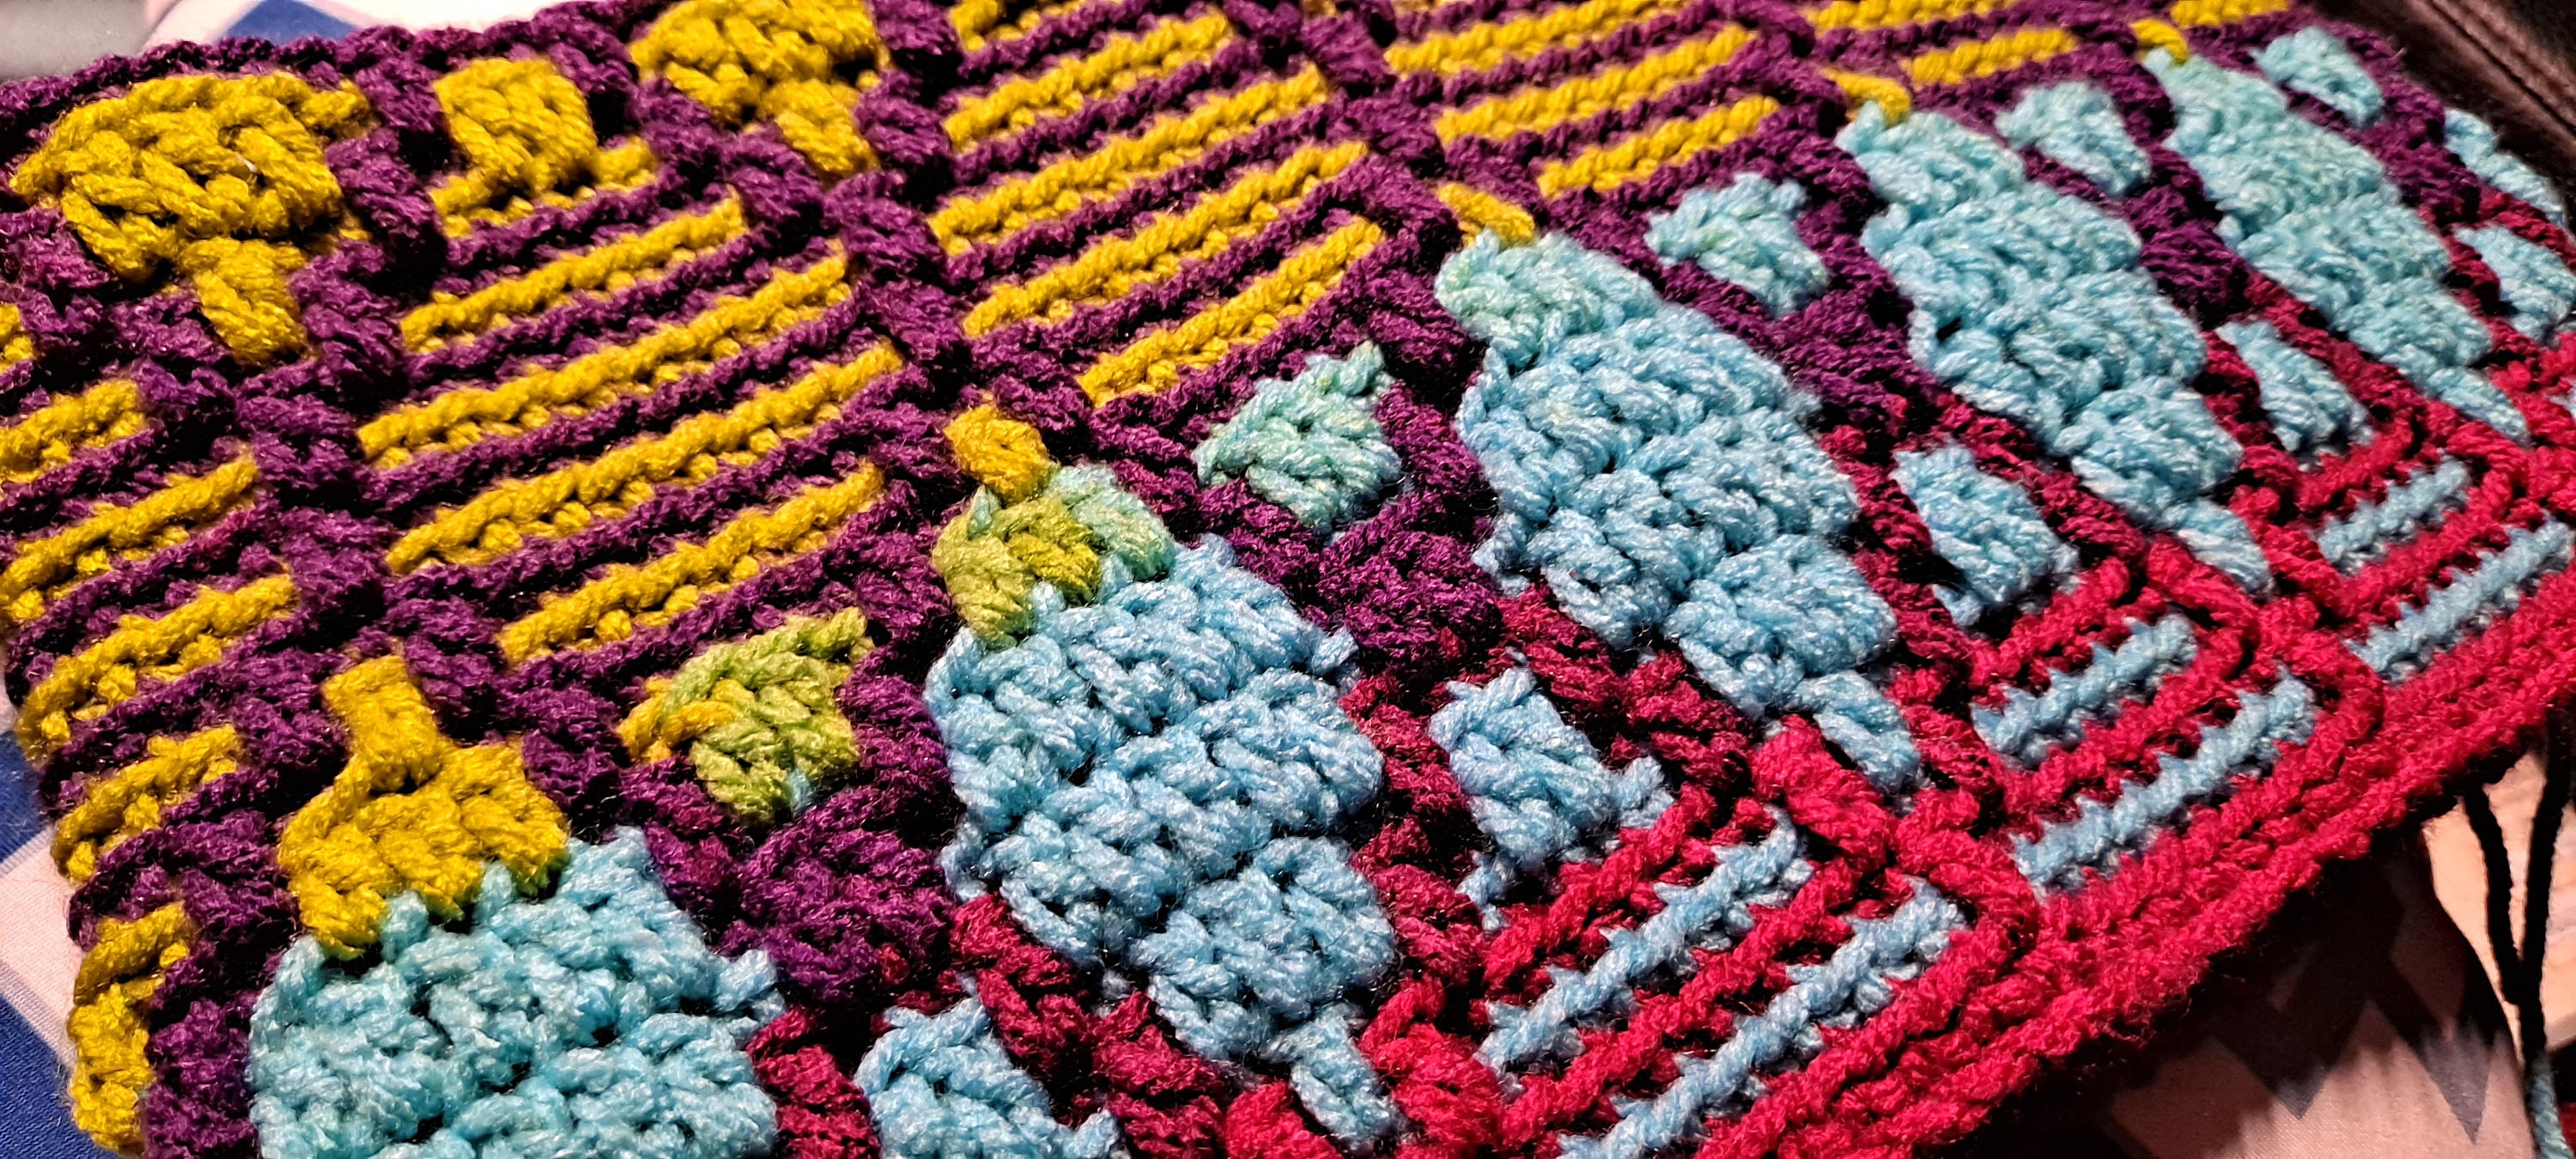 Mosaic Crochet Chart